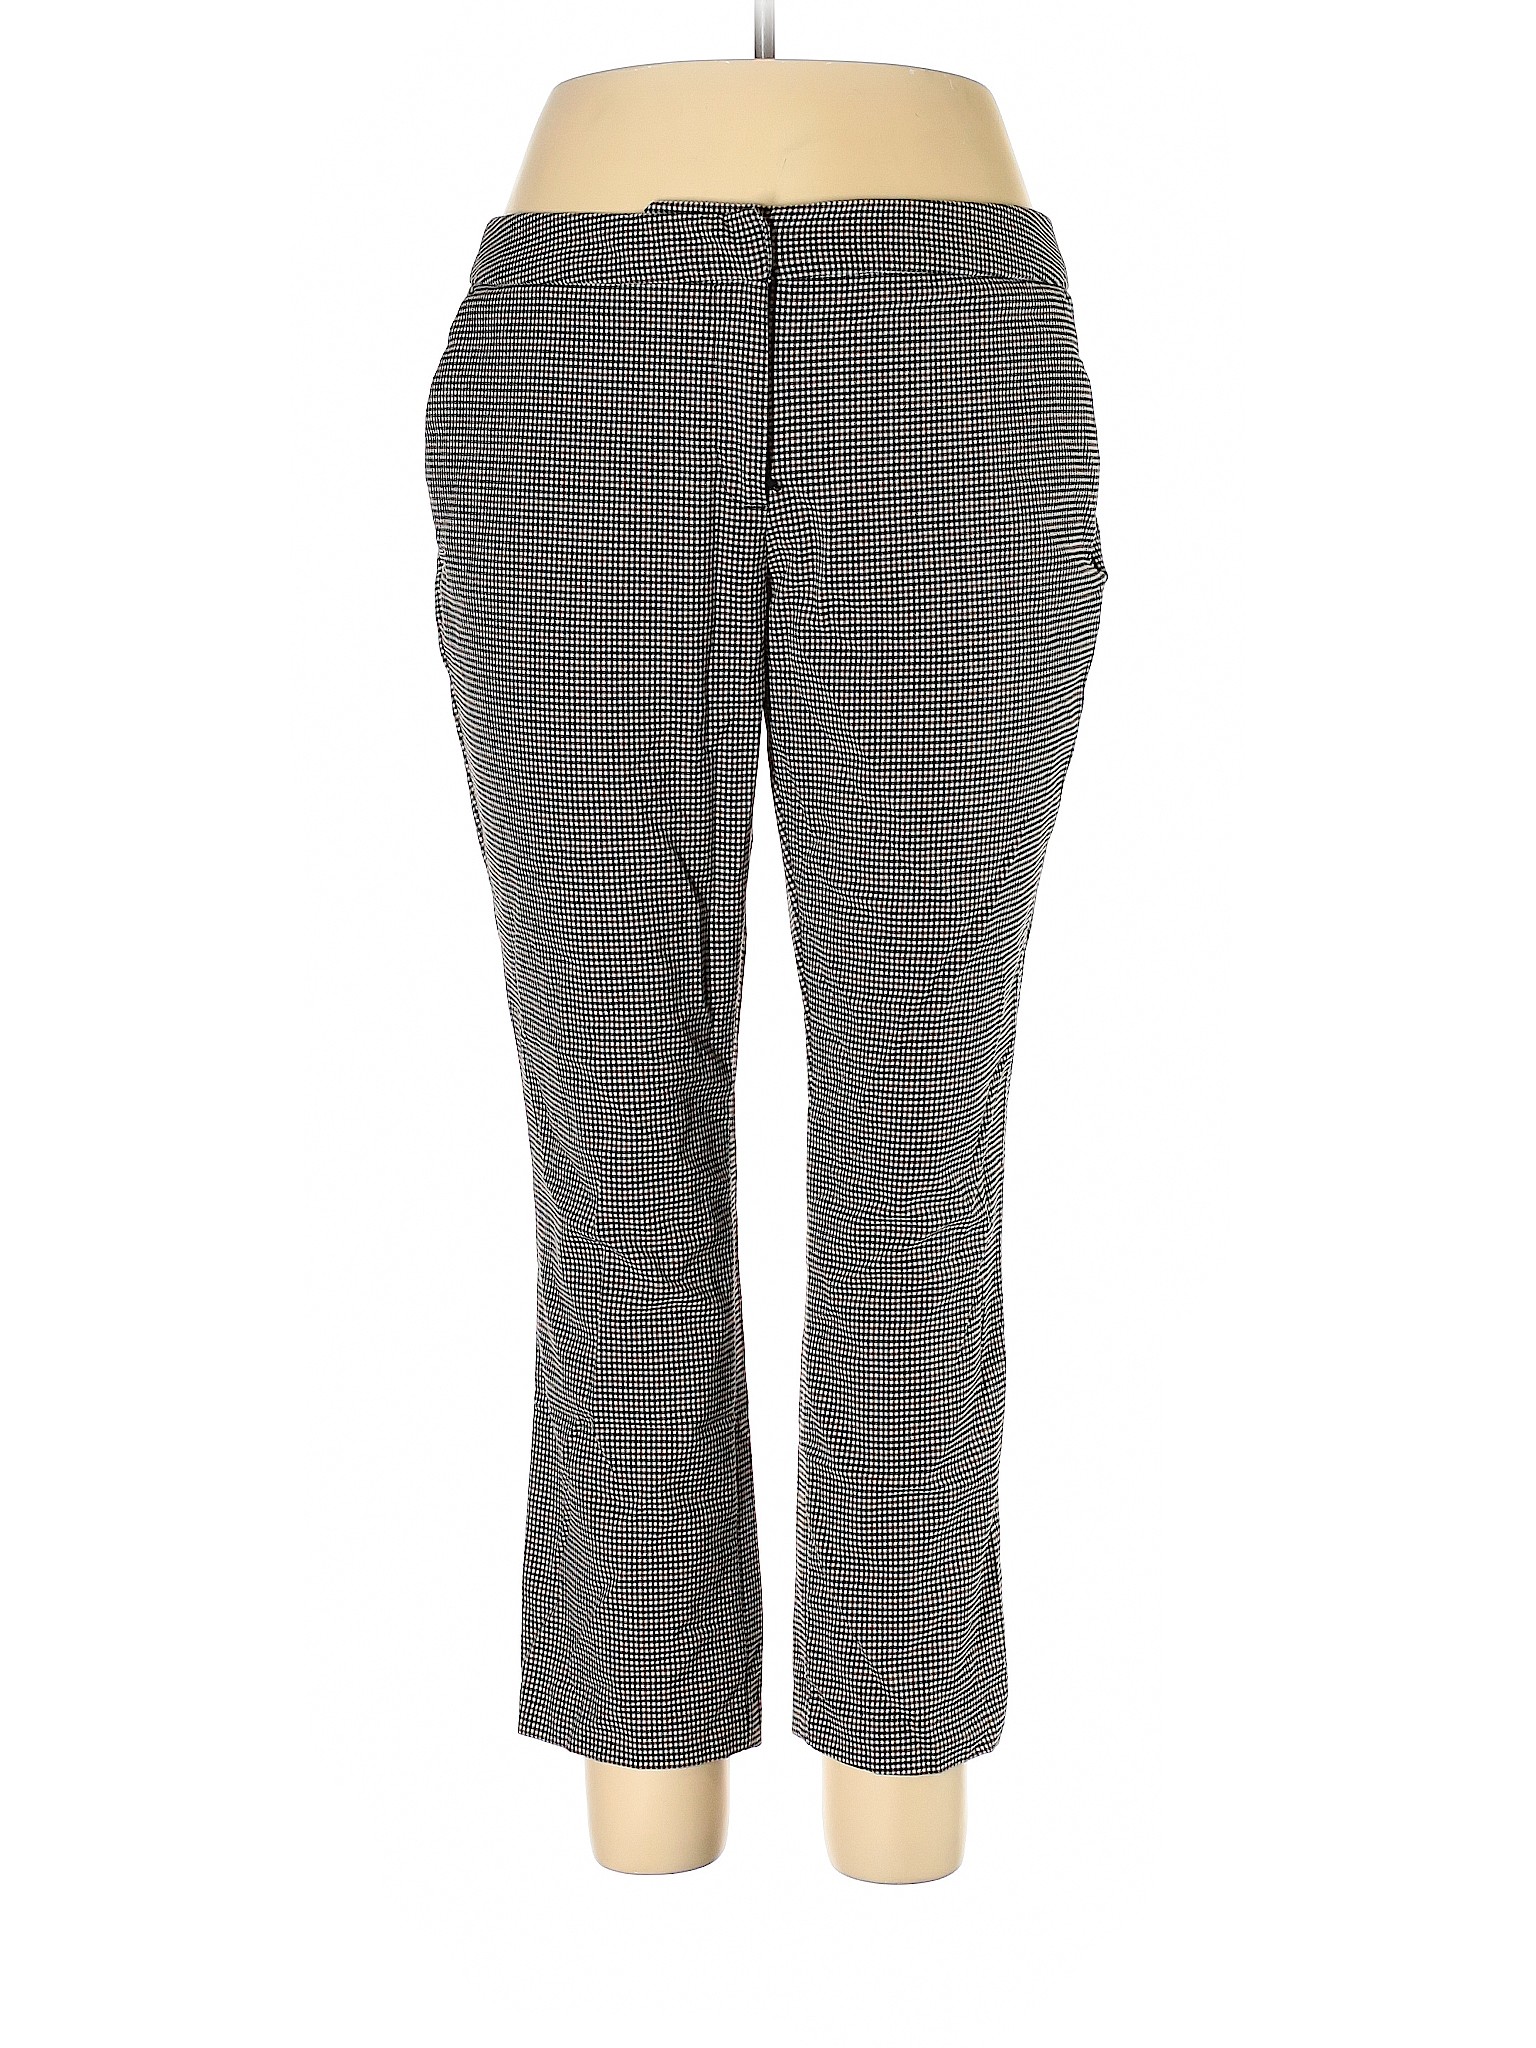 Adrienne Vittadini Women Gray Casual Pants 14 | eBay